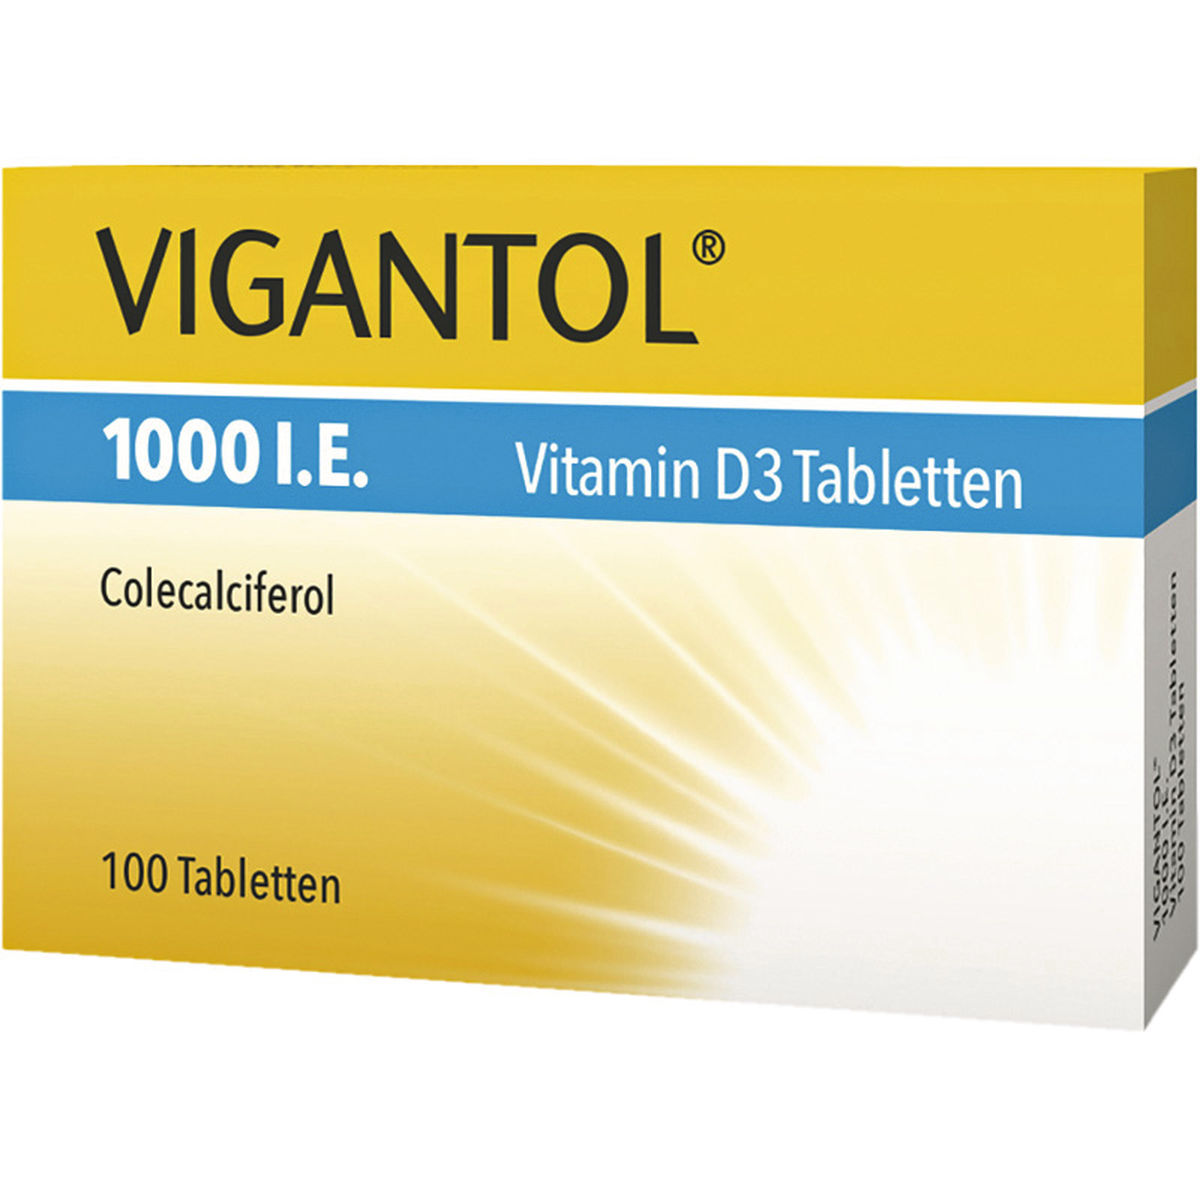 VIGANTOL 1.000 I.E. Vitamin D3 Tabletten, 100 St - best-arznei.de